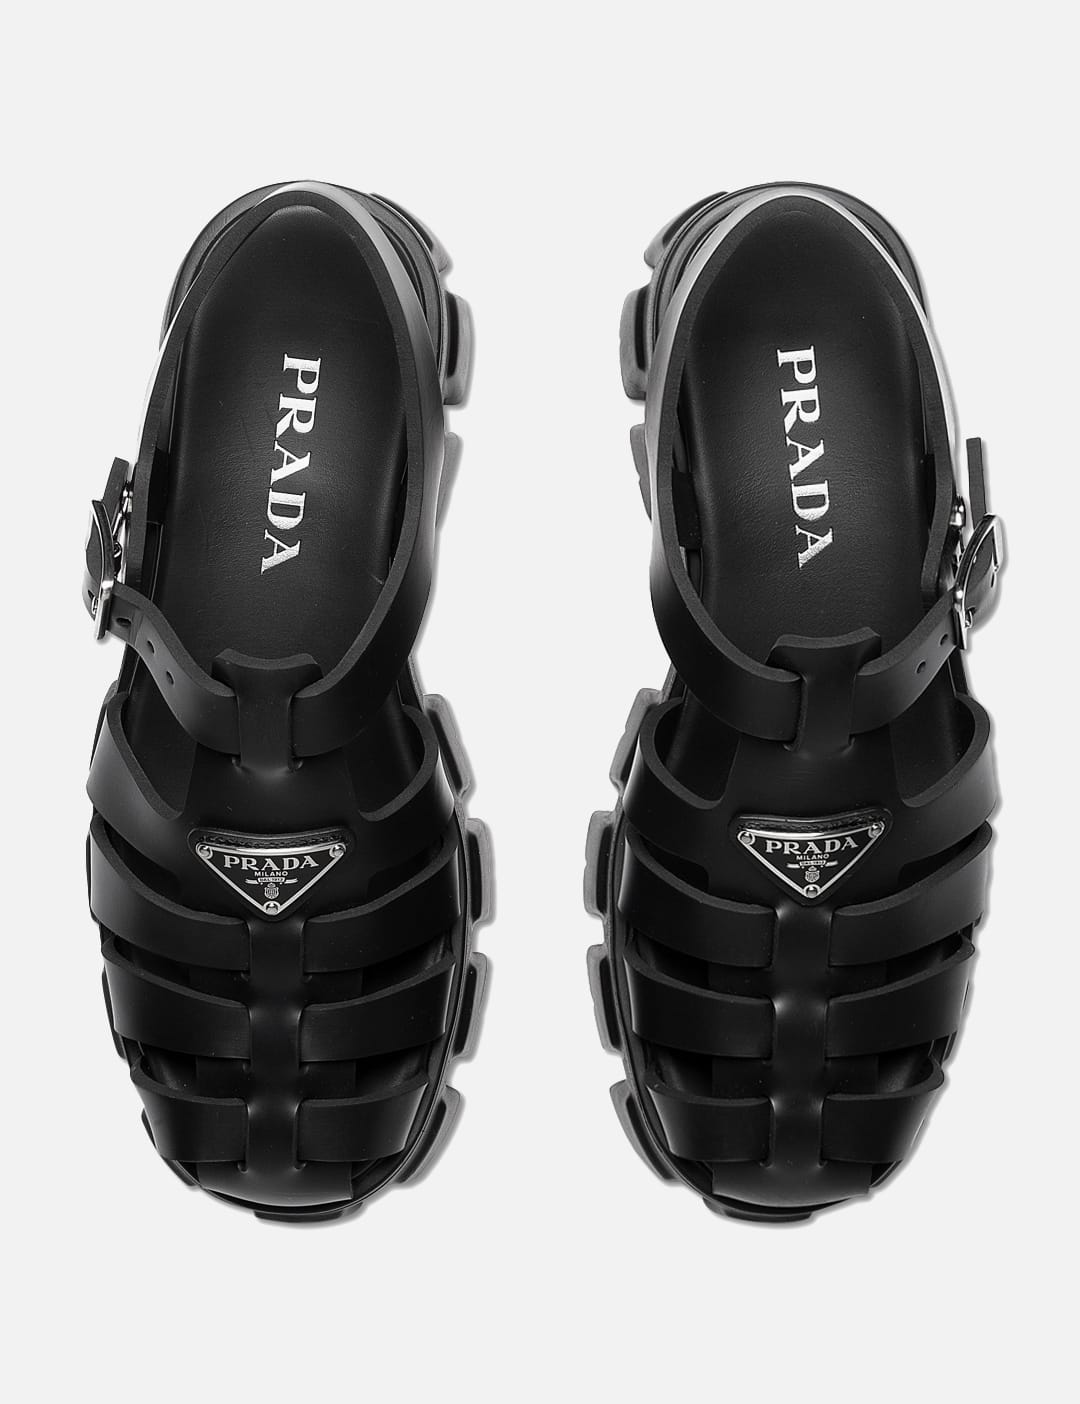 ROXONI Men's Comfort Rubber Flip Flop Slide Sandals | Walmart Canada